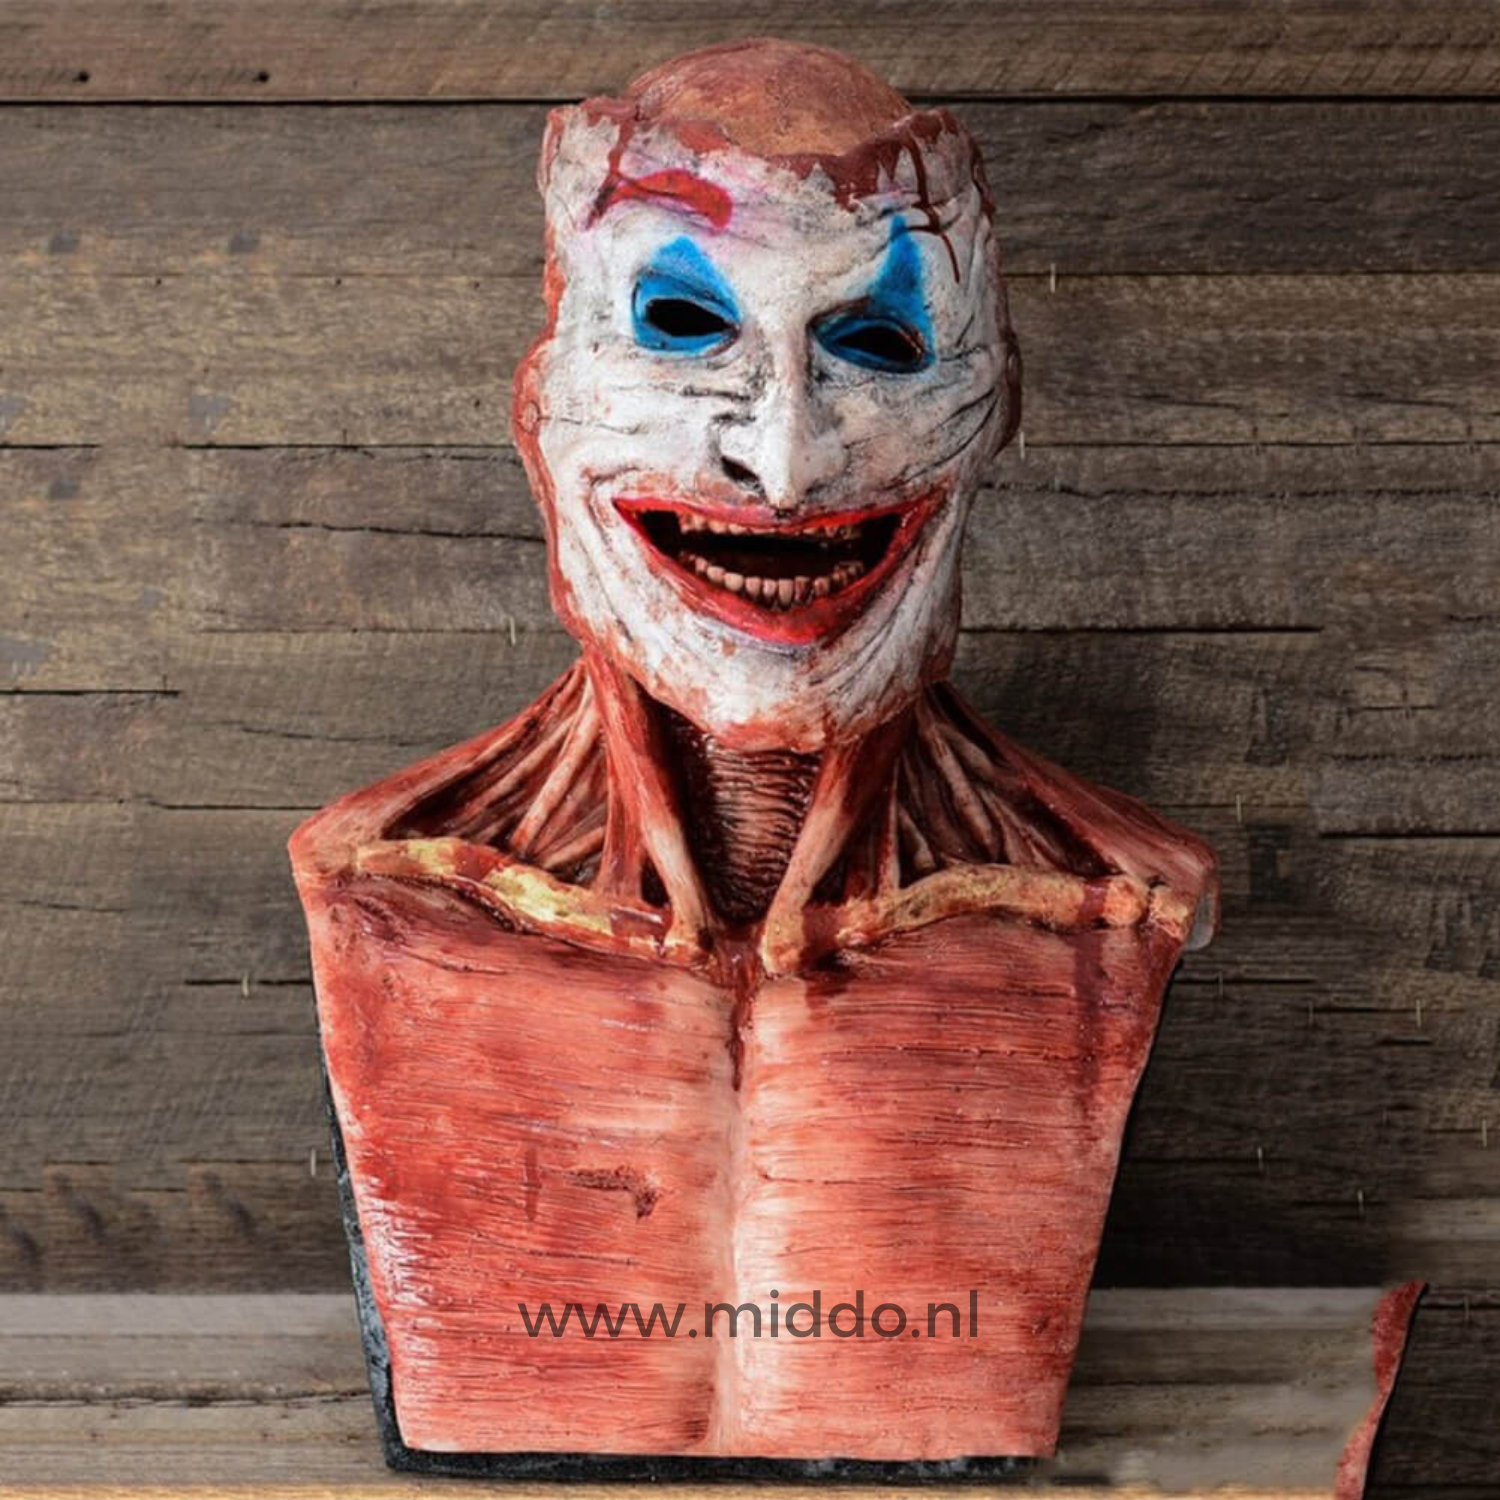 Ultra realistisch peel off masker op houten achtergrond, angstaanjagend clown gezicht.